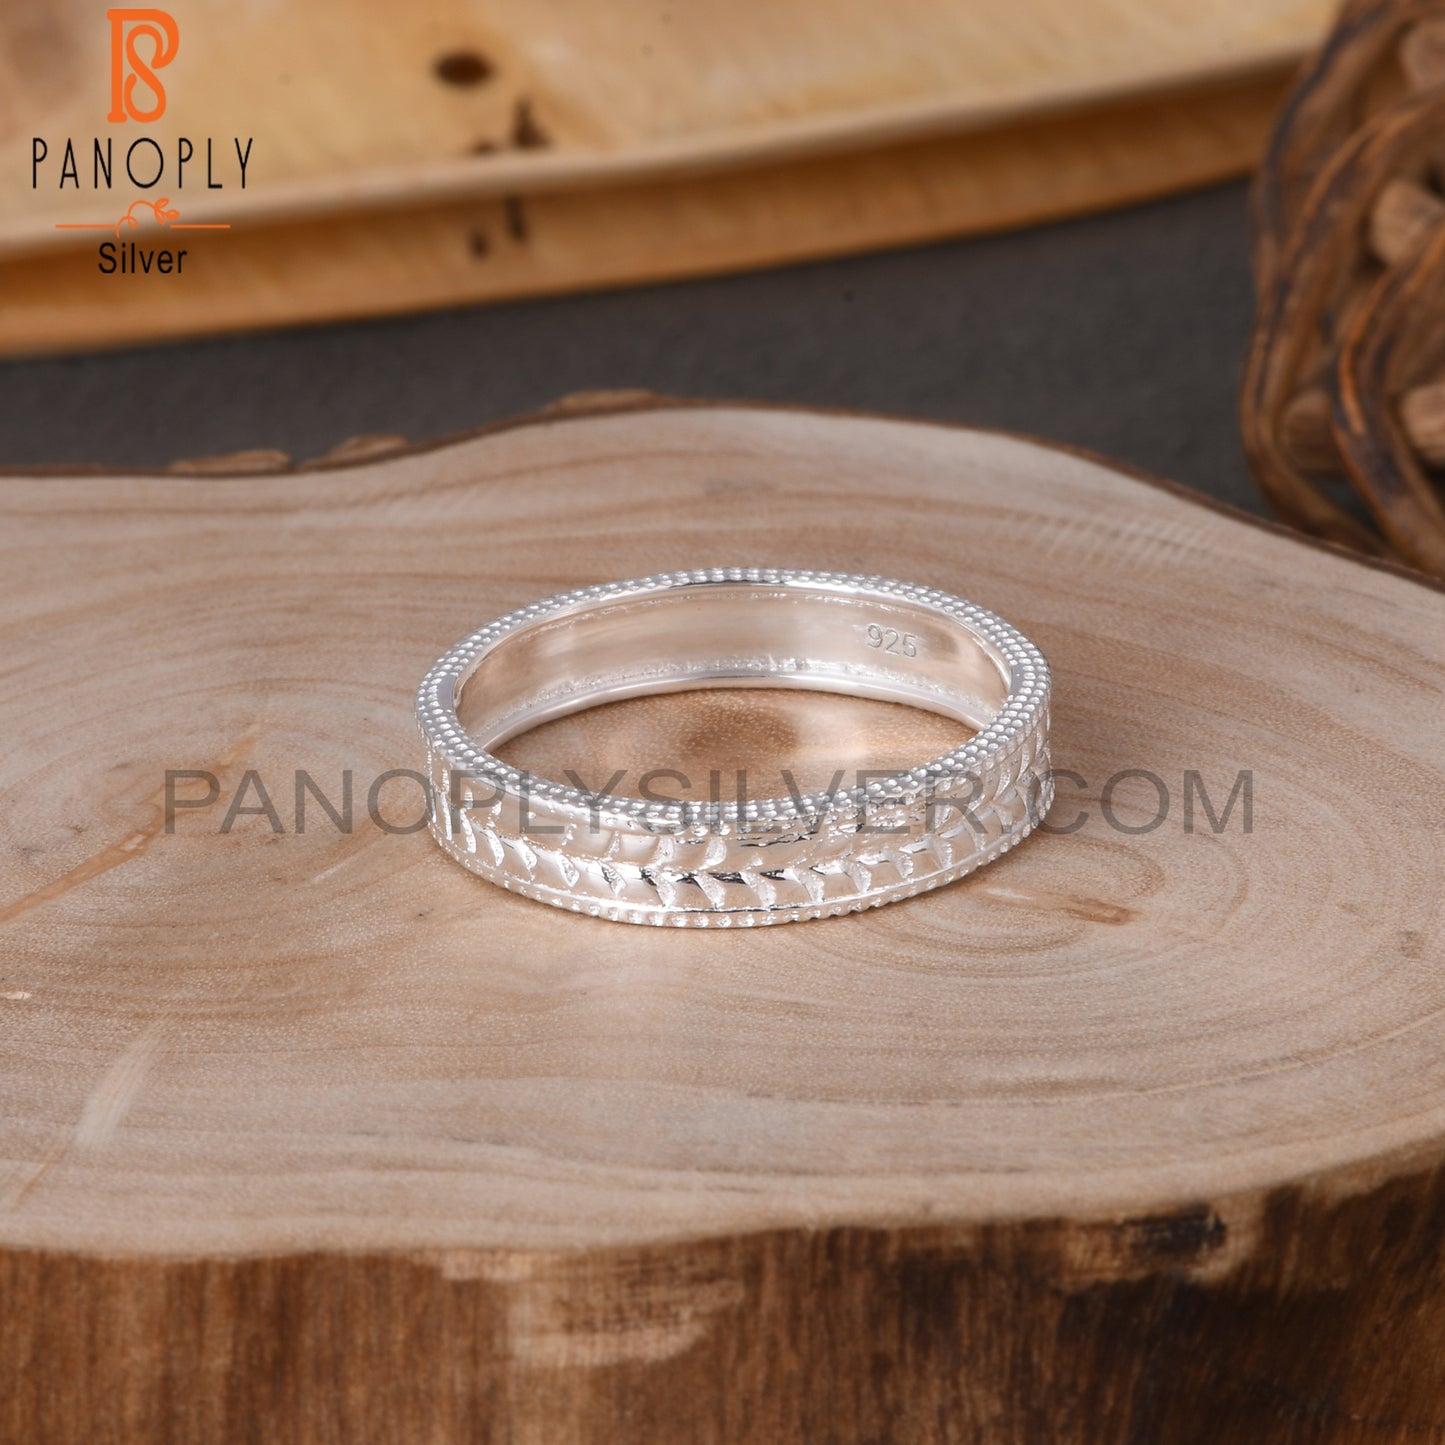 Handmade 925 Sterling Silver Leaf Pattern Ring